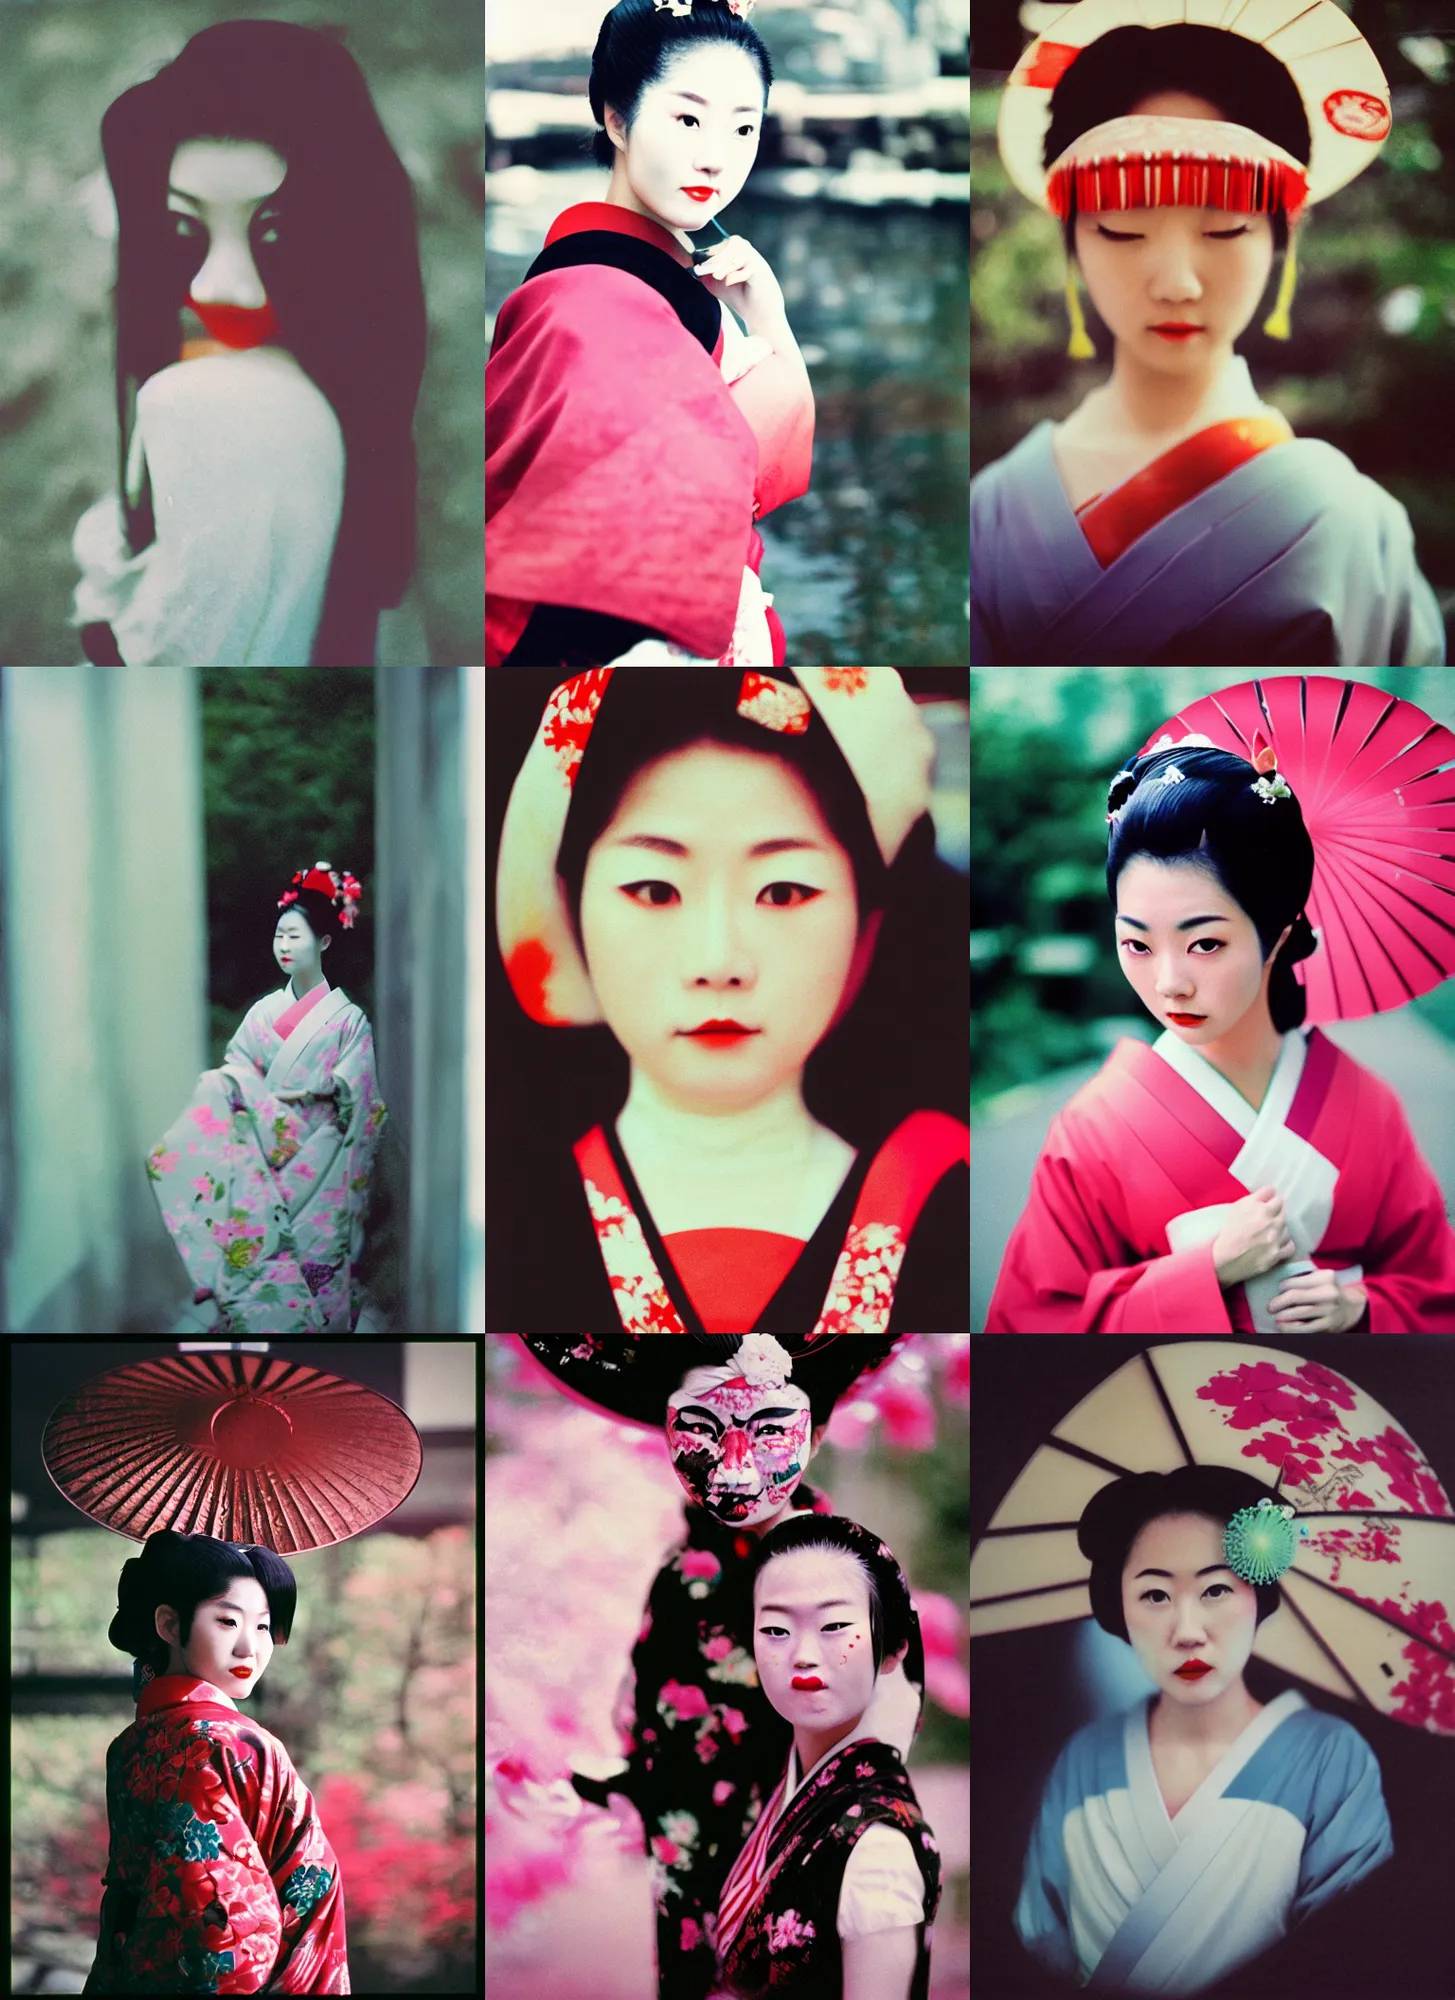 Prompt: Portrait Photograph of a Japanese Geisha Lomography X-Pro 200